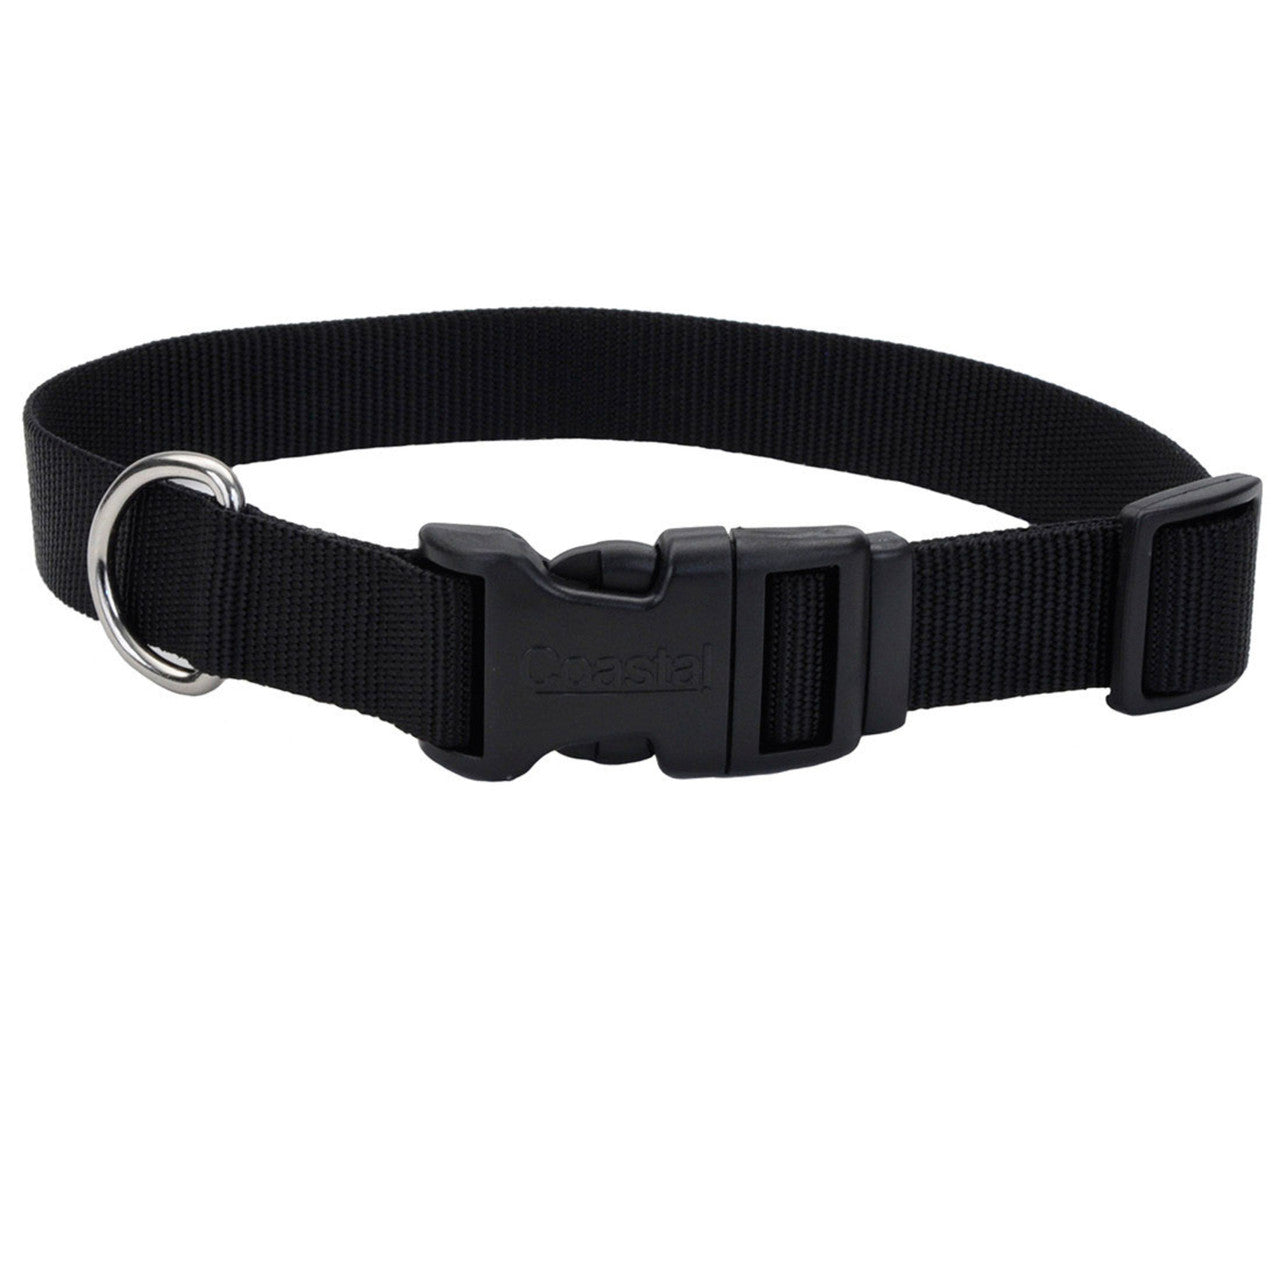 Coastal Adjustable Nylon Dog Collar with Plastic Buckle Black 3/8 in x 8-12 in